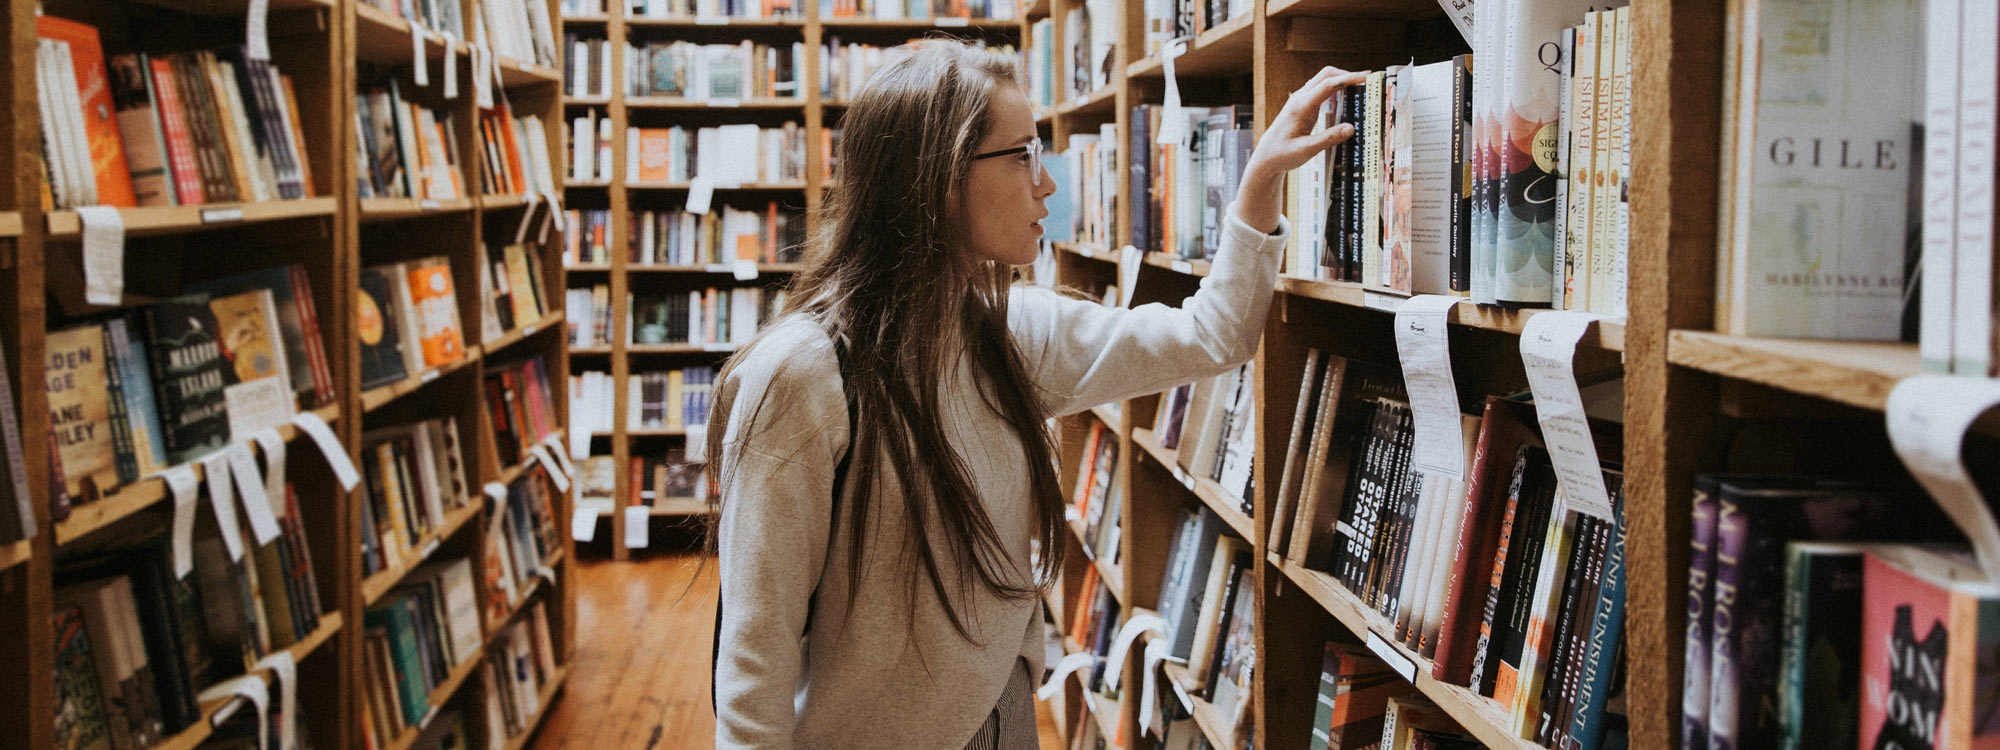 Girl taking a boook from bookshelf